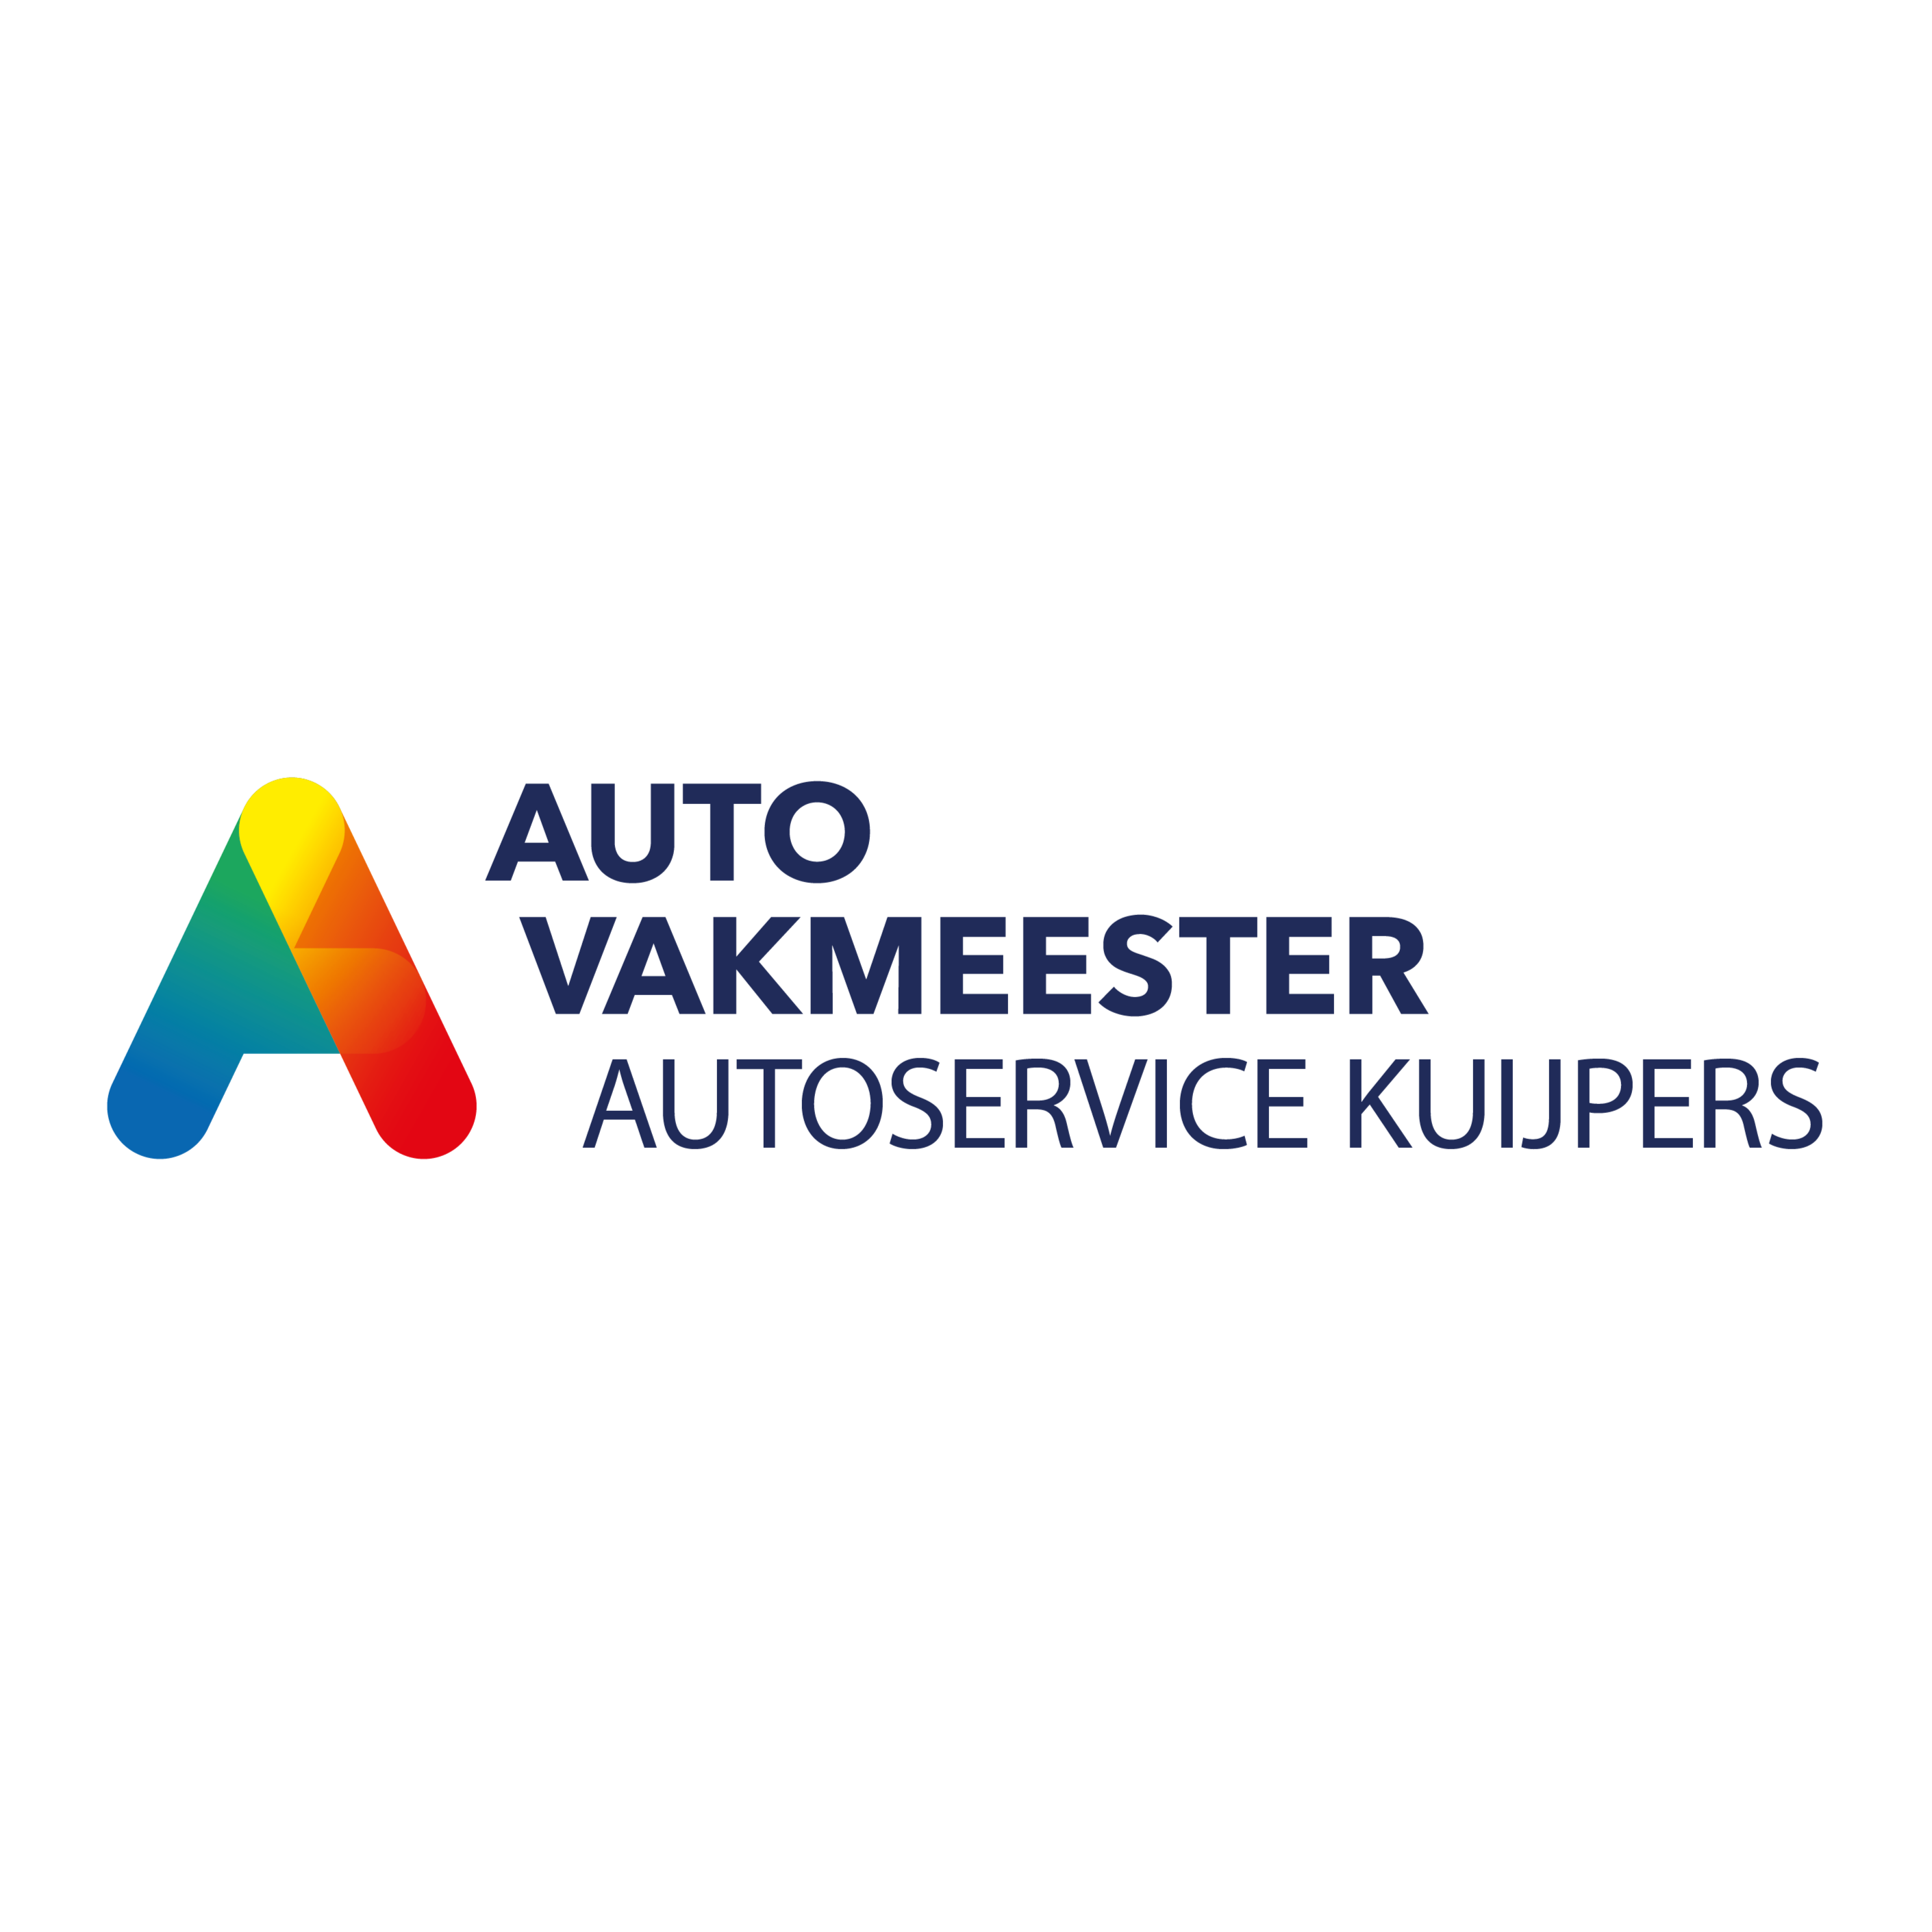 Autovakmeester Autoservice Kuijpers Logo